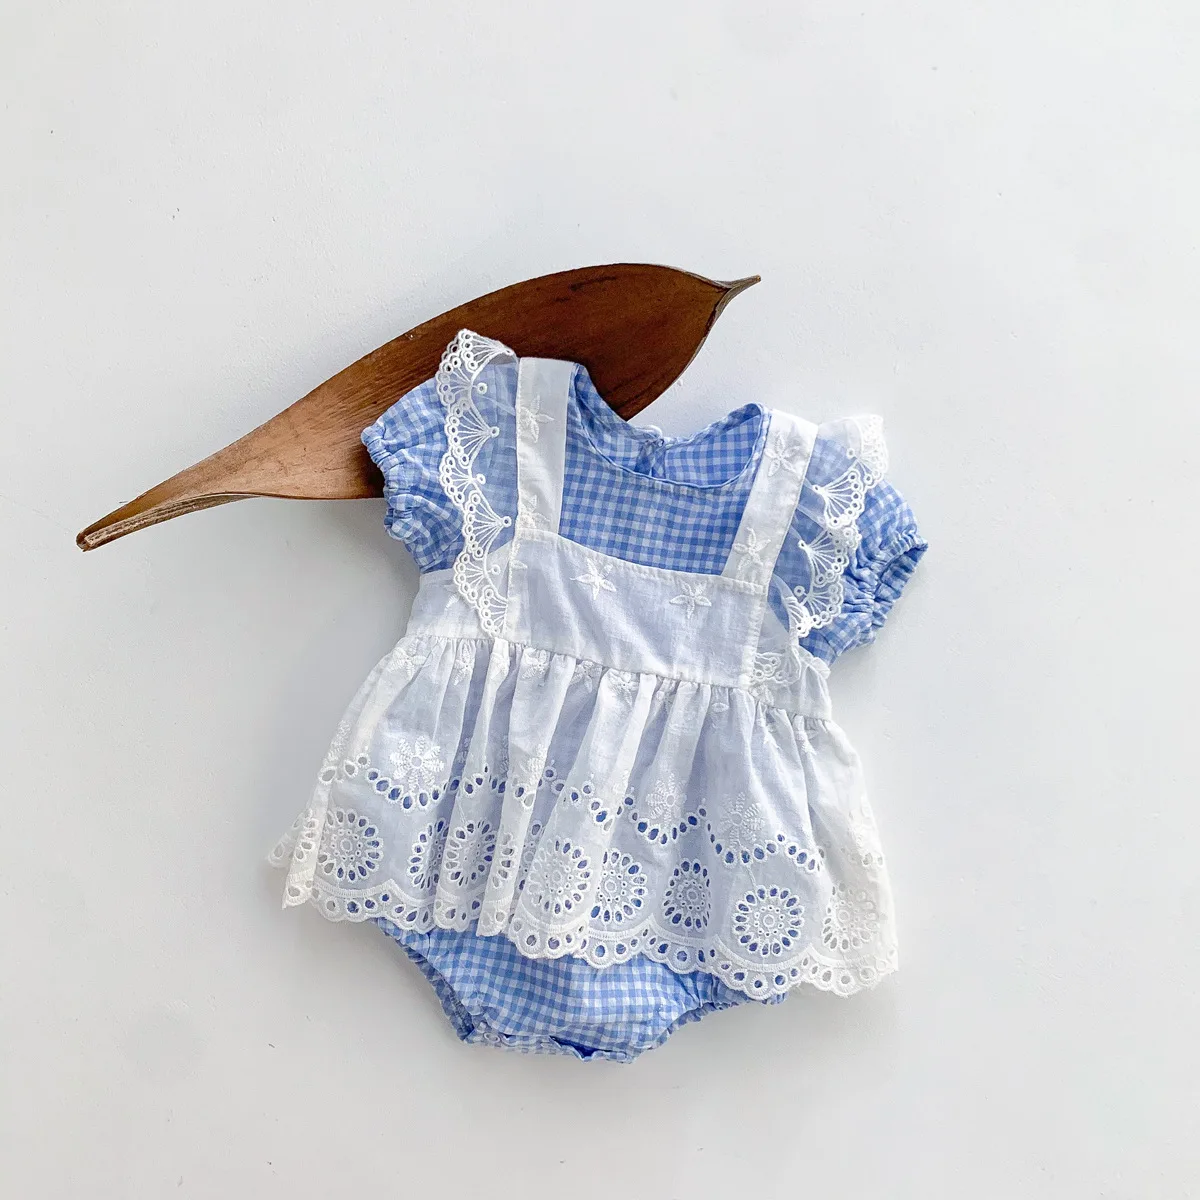 

Wholesale newborn Baby cotton lace plaid jumpsuit ruffled short sleeve 2 pcs romper for babies, Picture shows